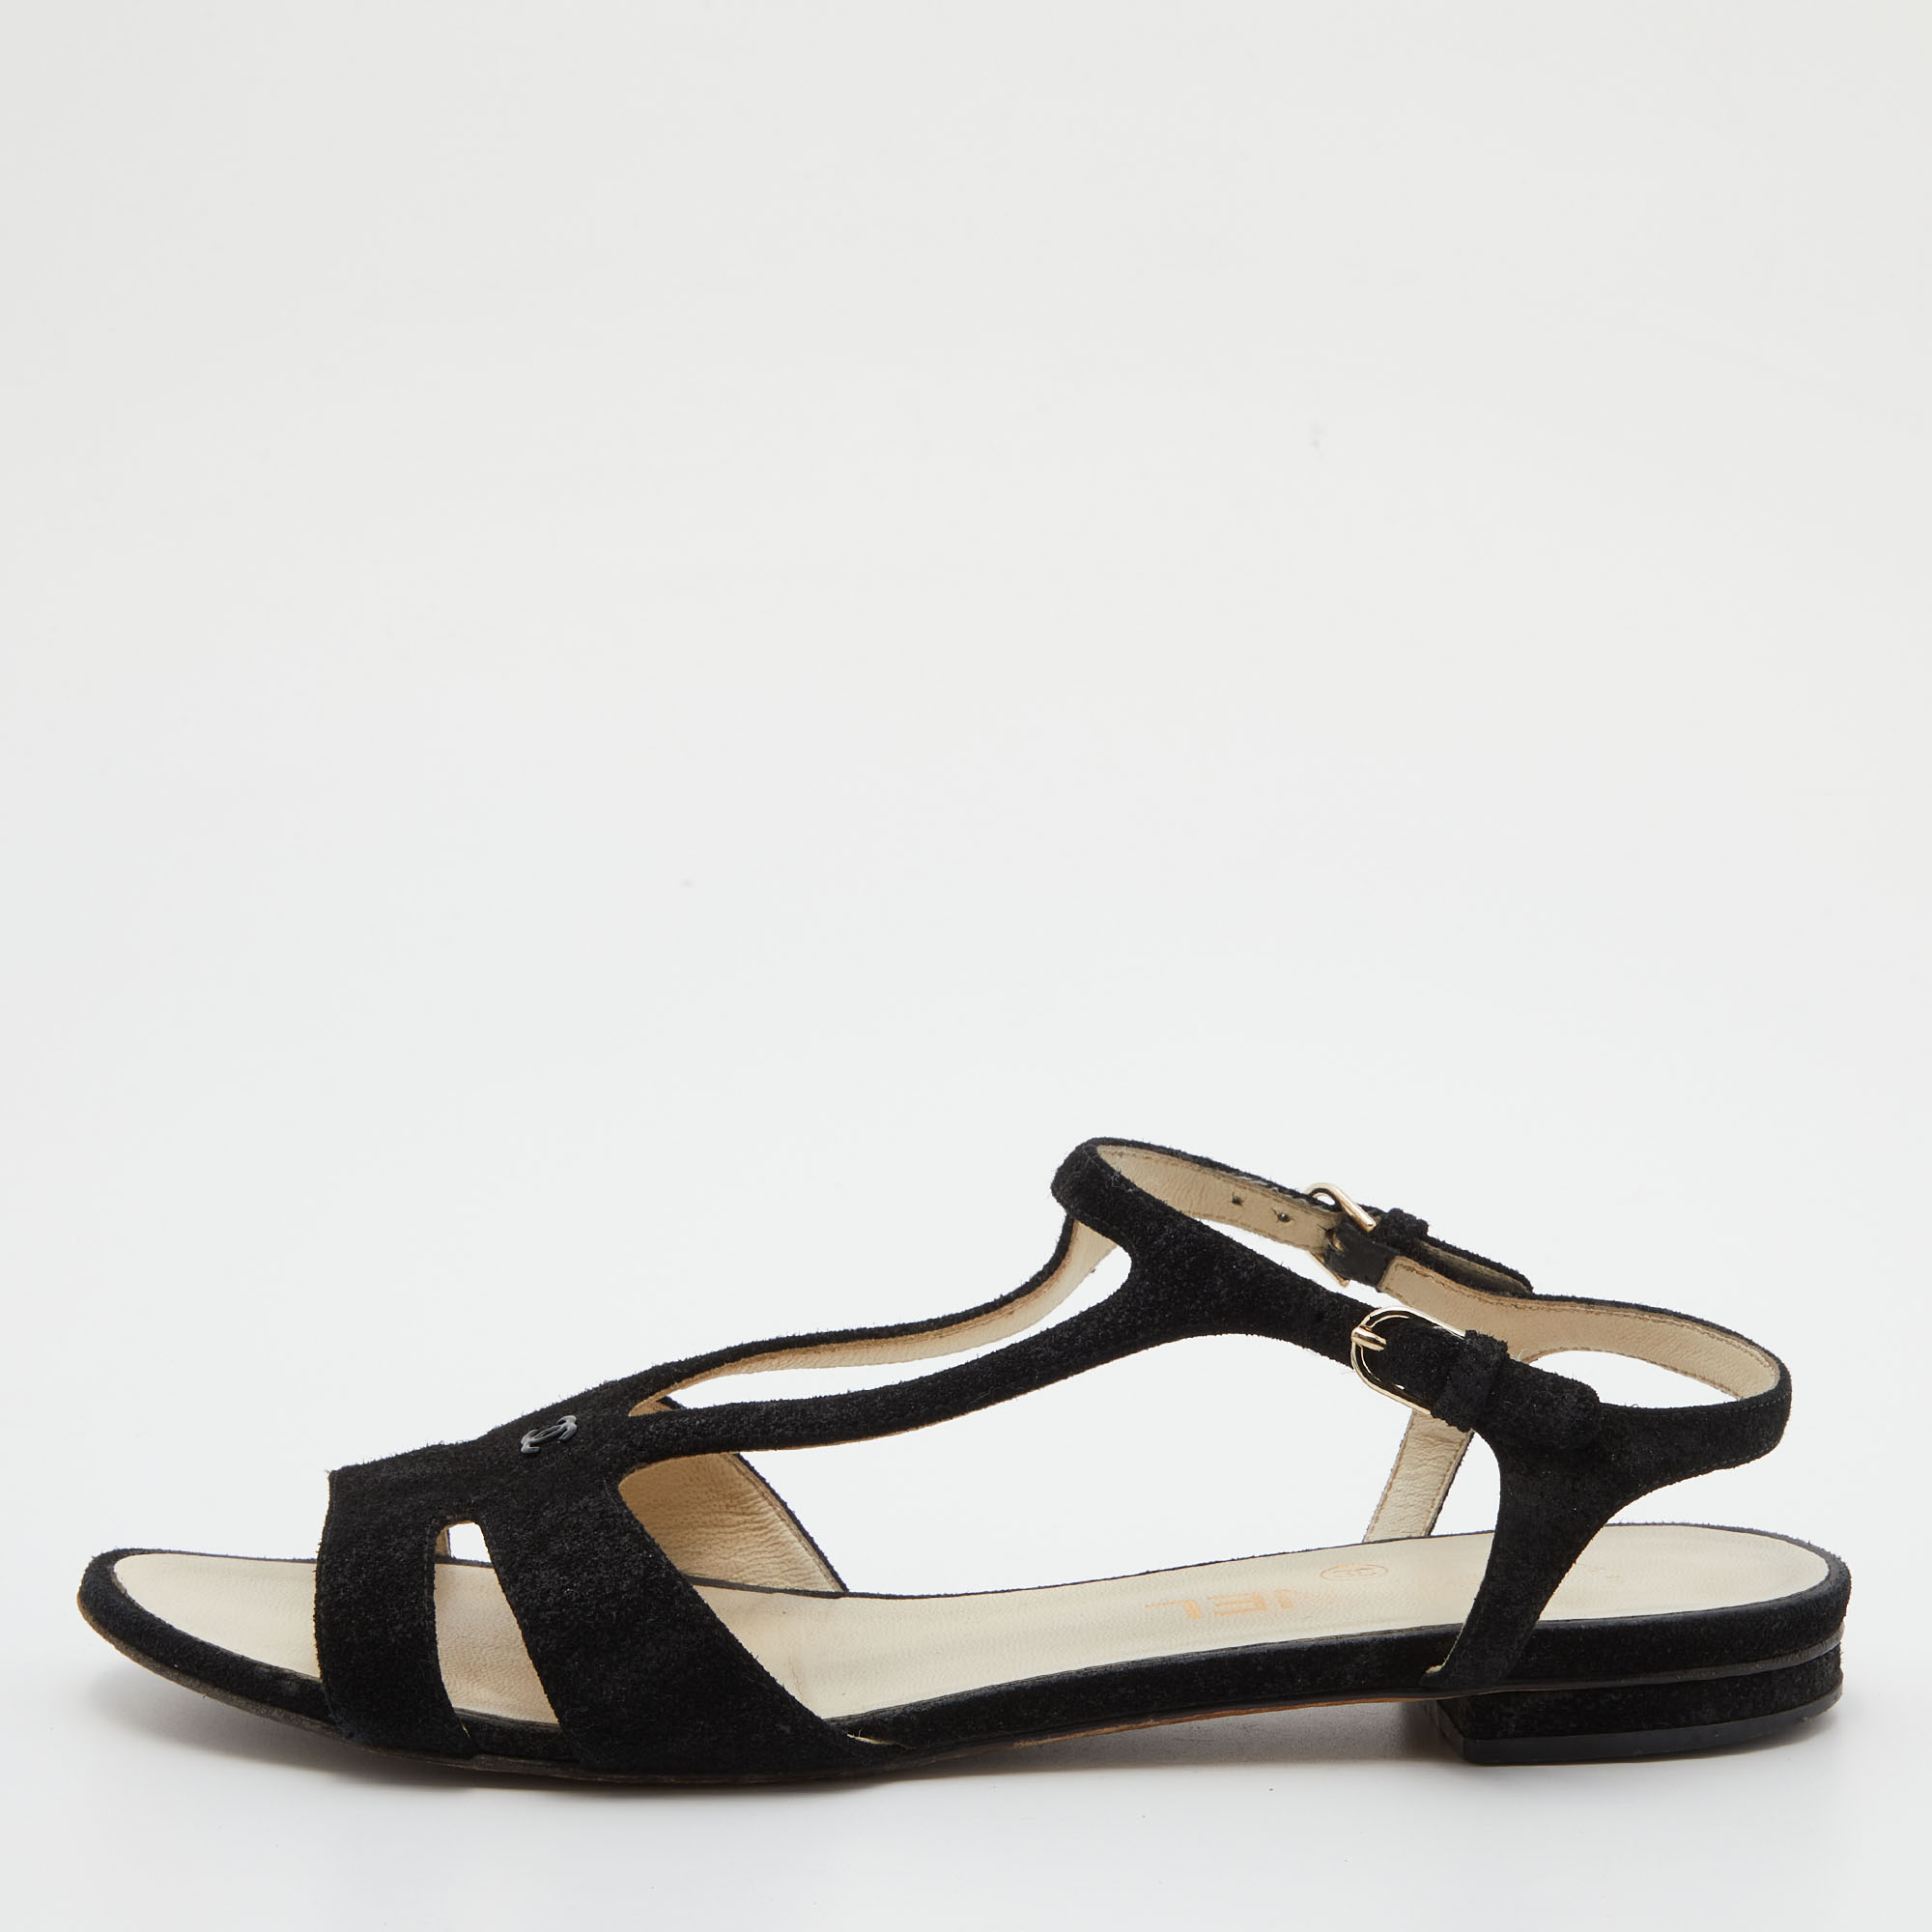 

Chanel Black Suede Cut Out Flat Sandals Size